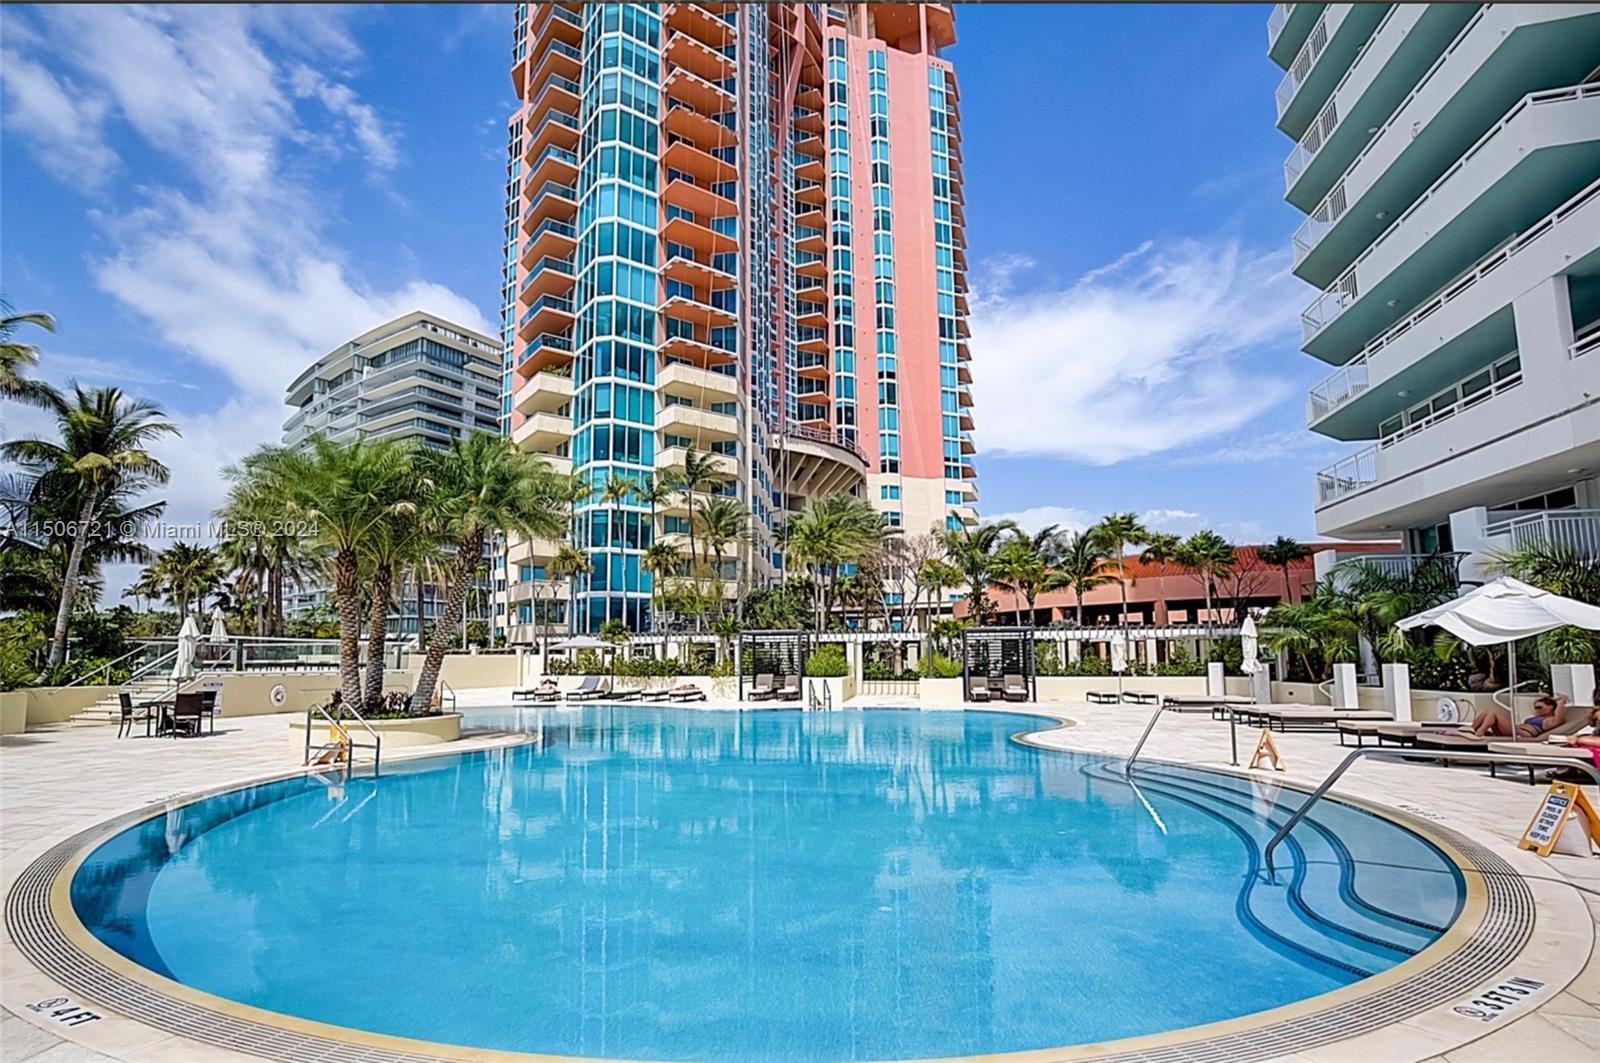 Property for Sale at 300 S Pointe Dr 405, Miami Beach, Miami-Dade County, Florida - Bedrooms: 3 
Bathrooms: 3  - $2,395,000